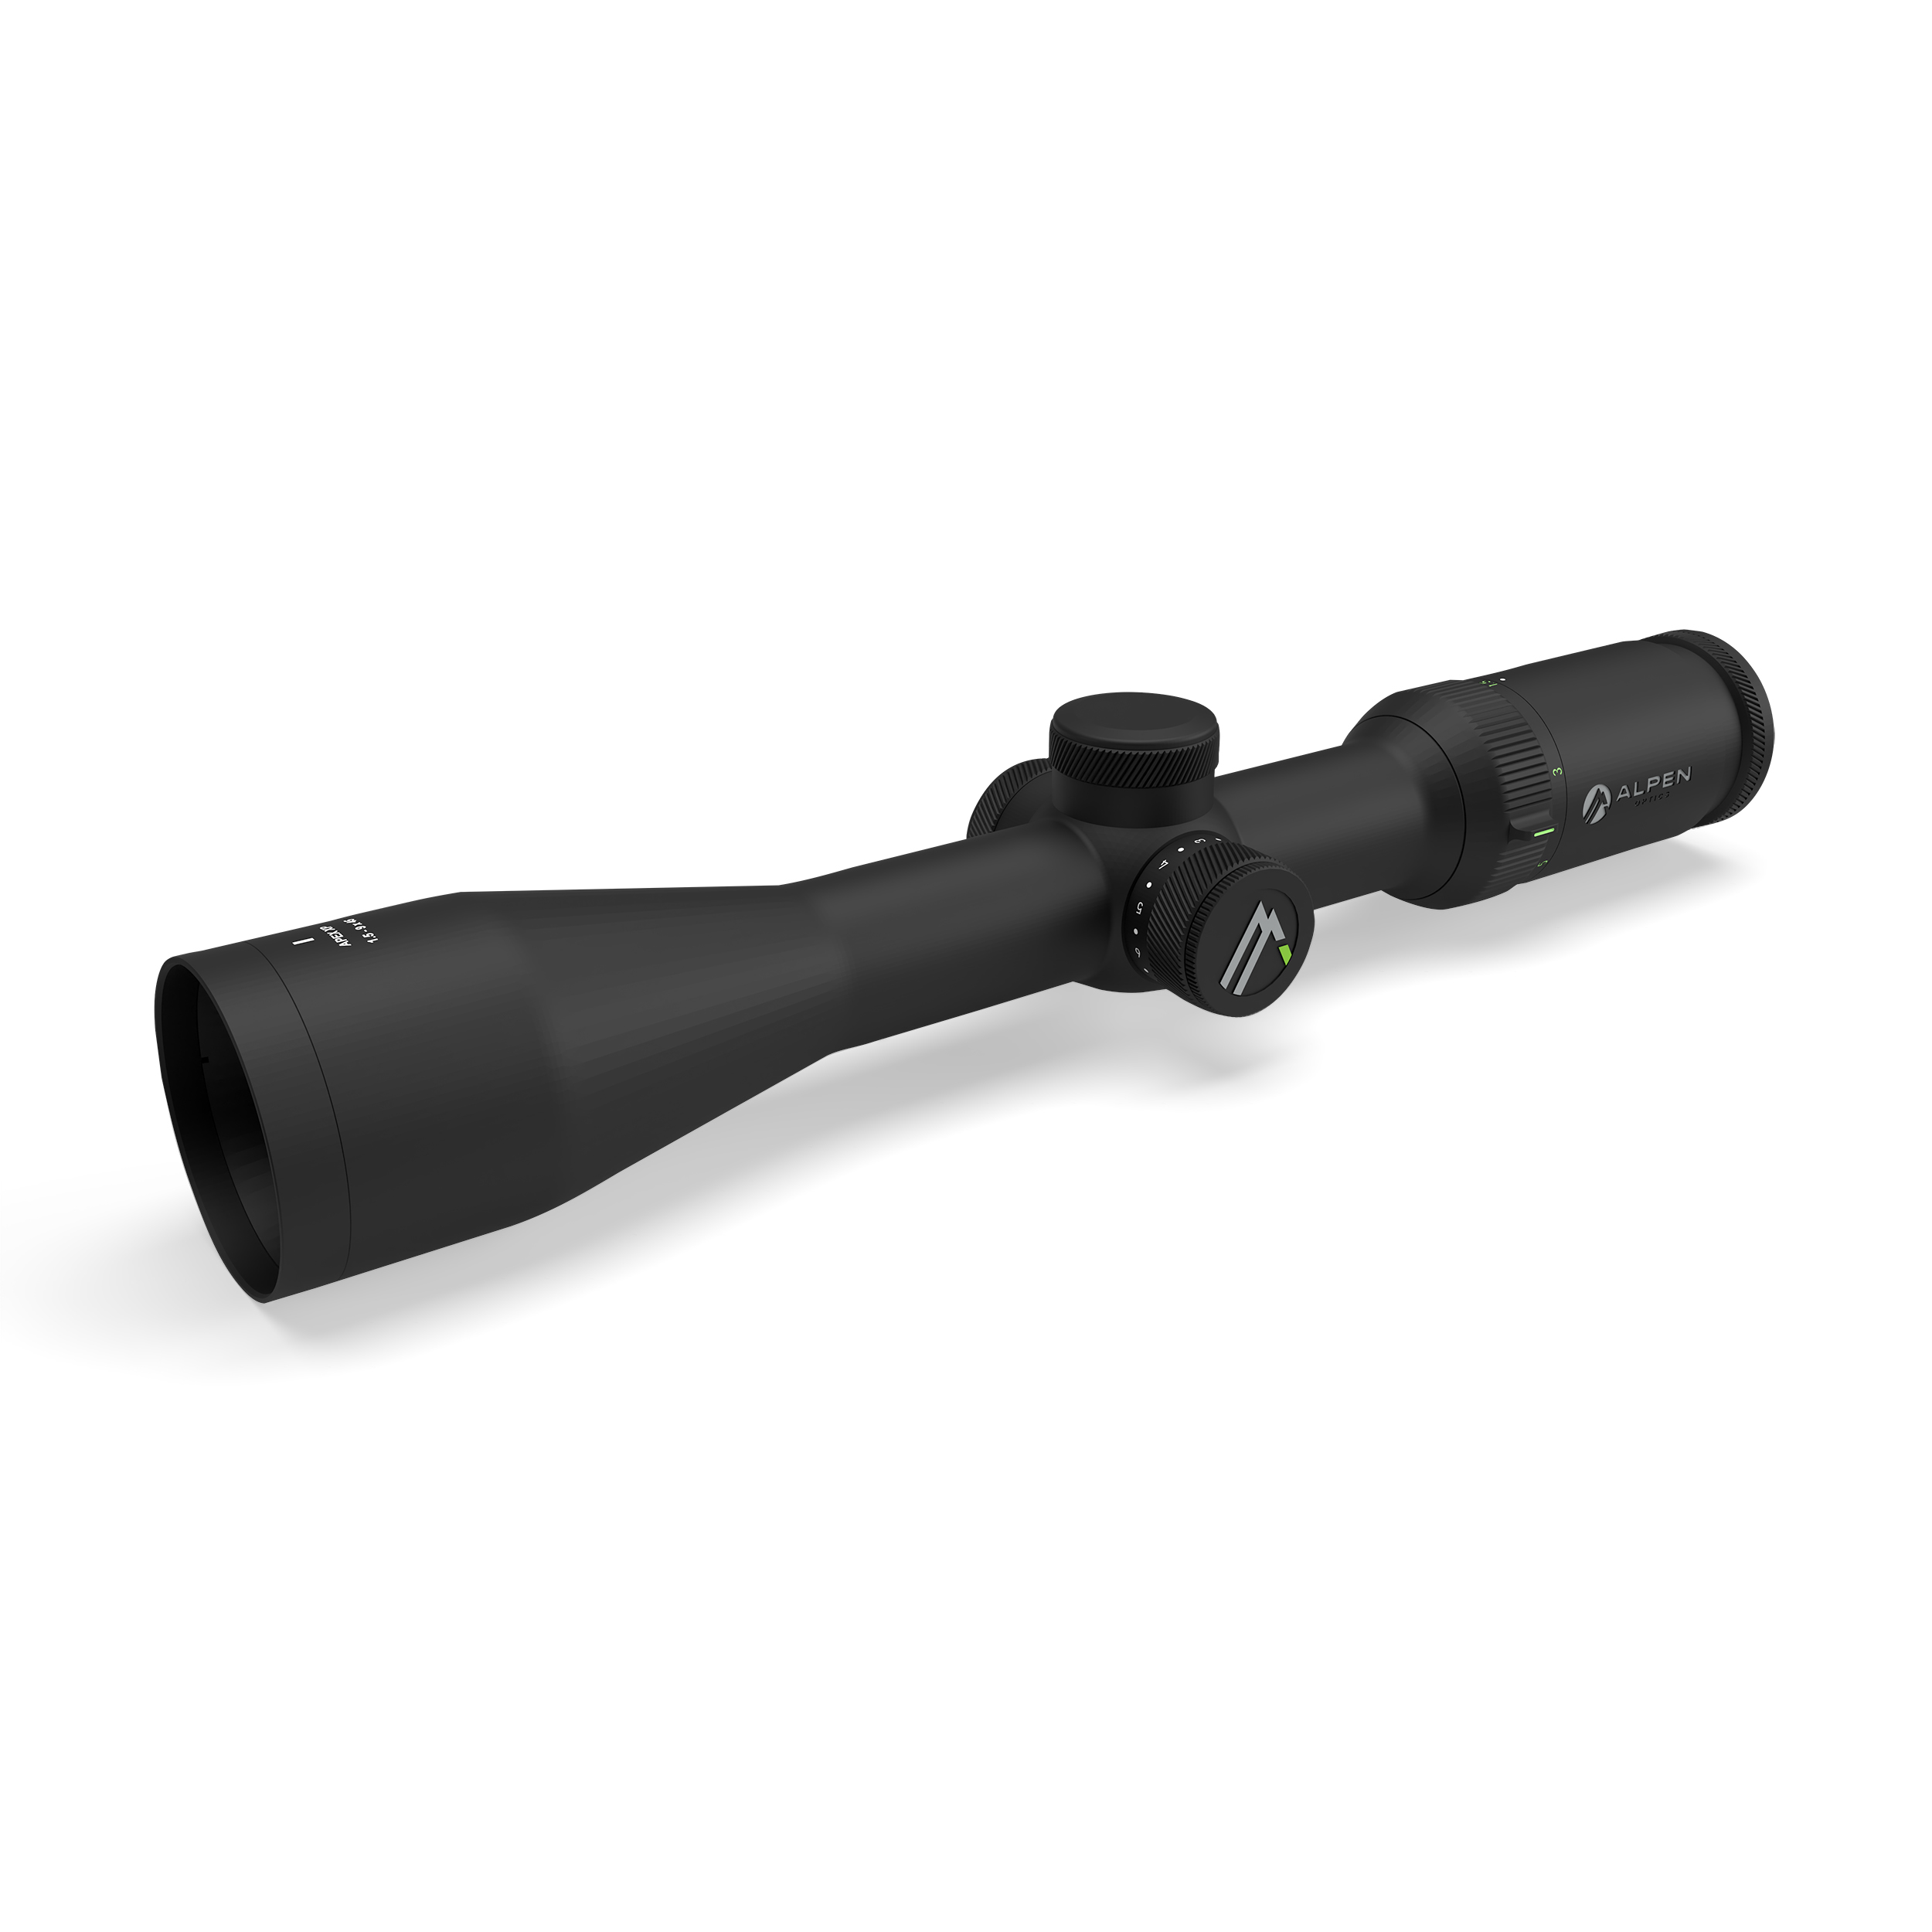 ALPEN OPTICS Apex XP 1.5-9x45 A4 riflescope with SmartDot technology